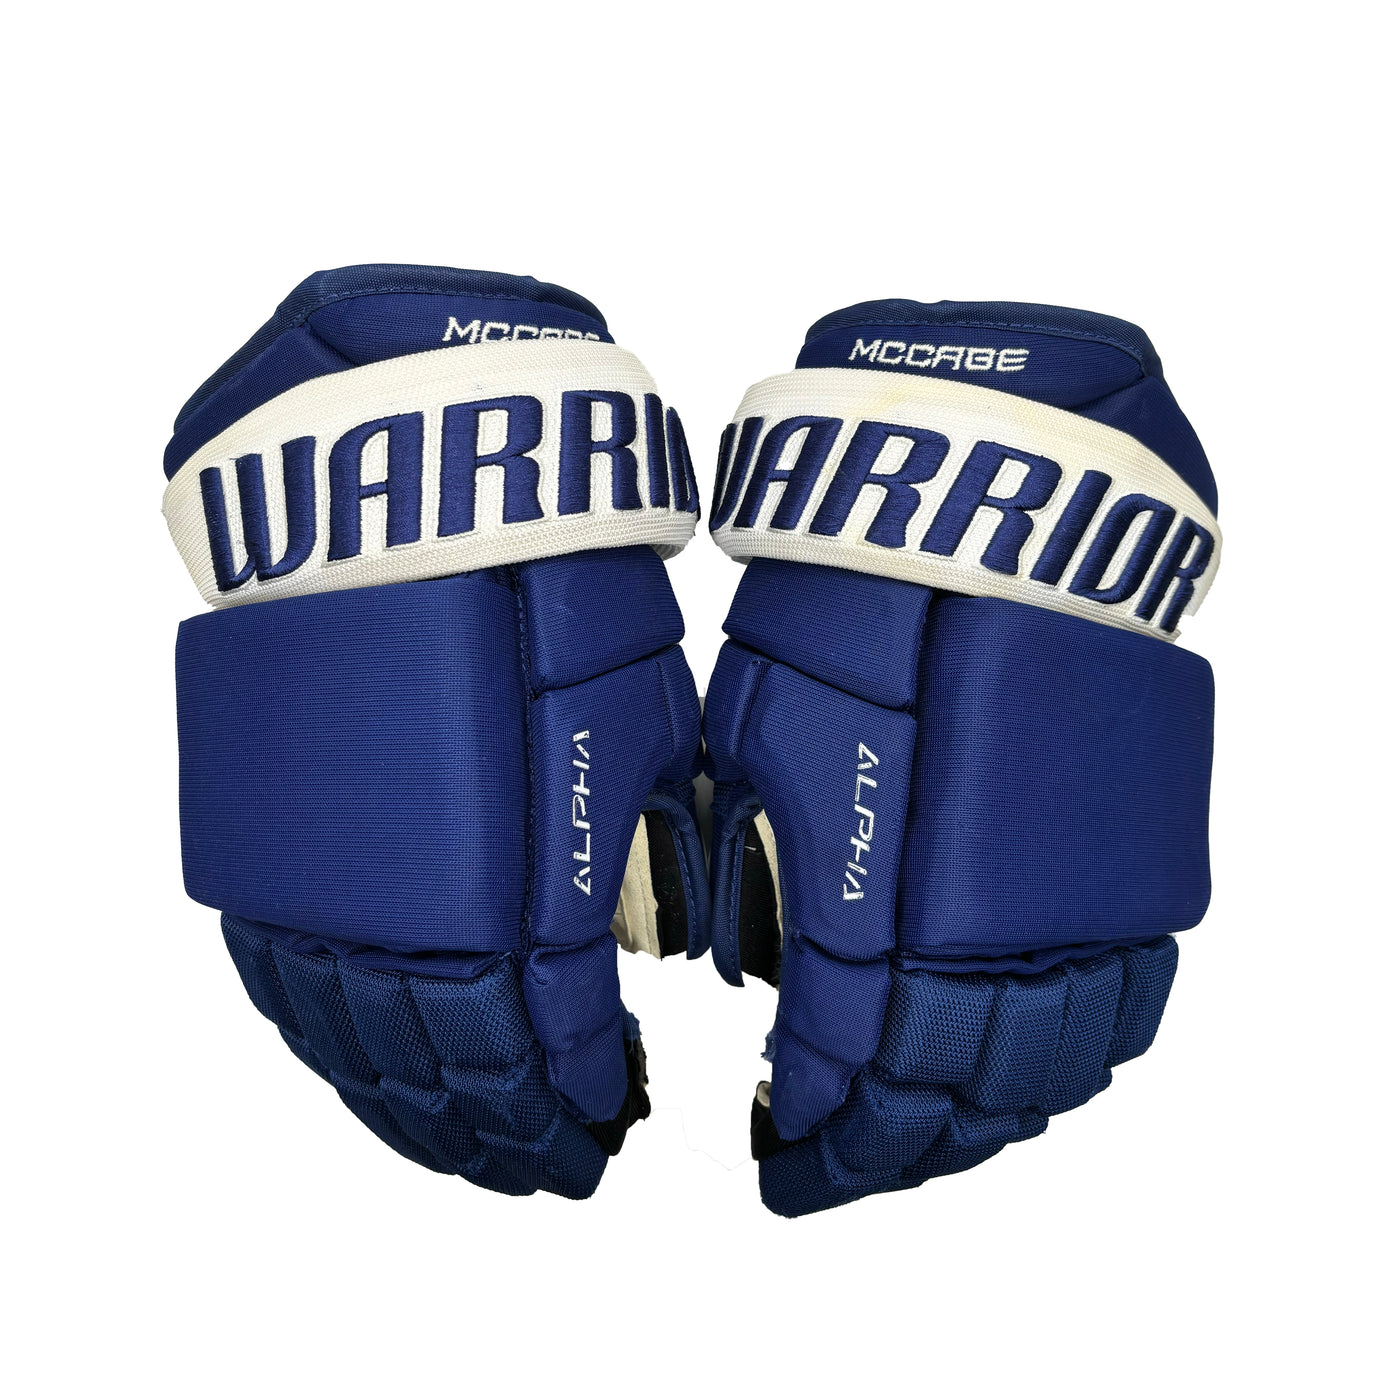 Warrior Alpha QX -  Toronto Maple Leafs - Used Pro Stock Glove - JM - Short Cuff